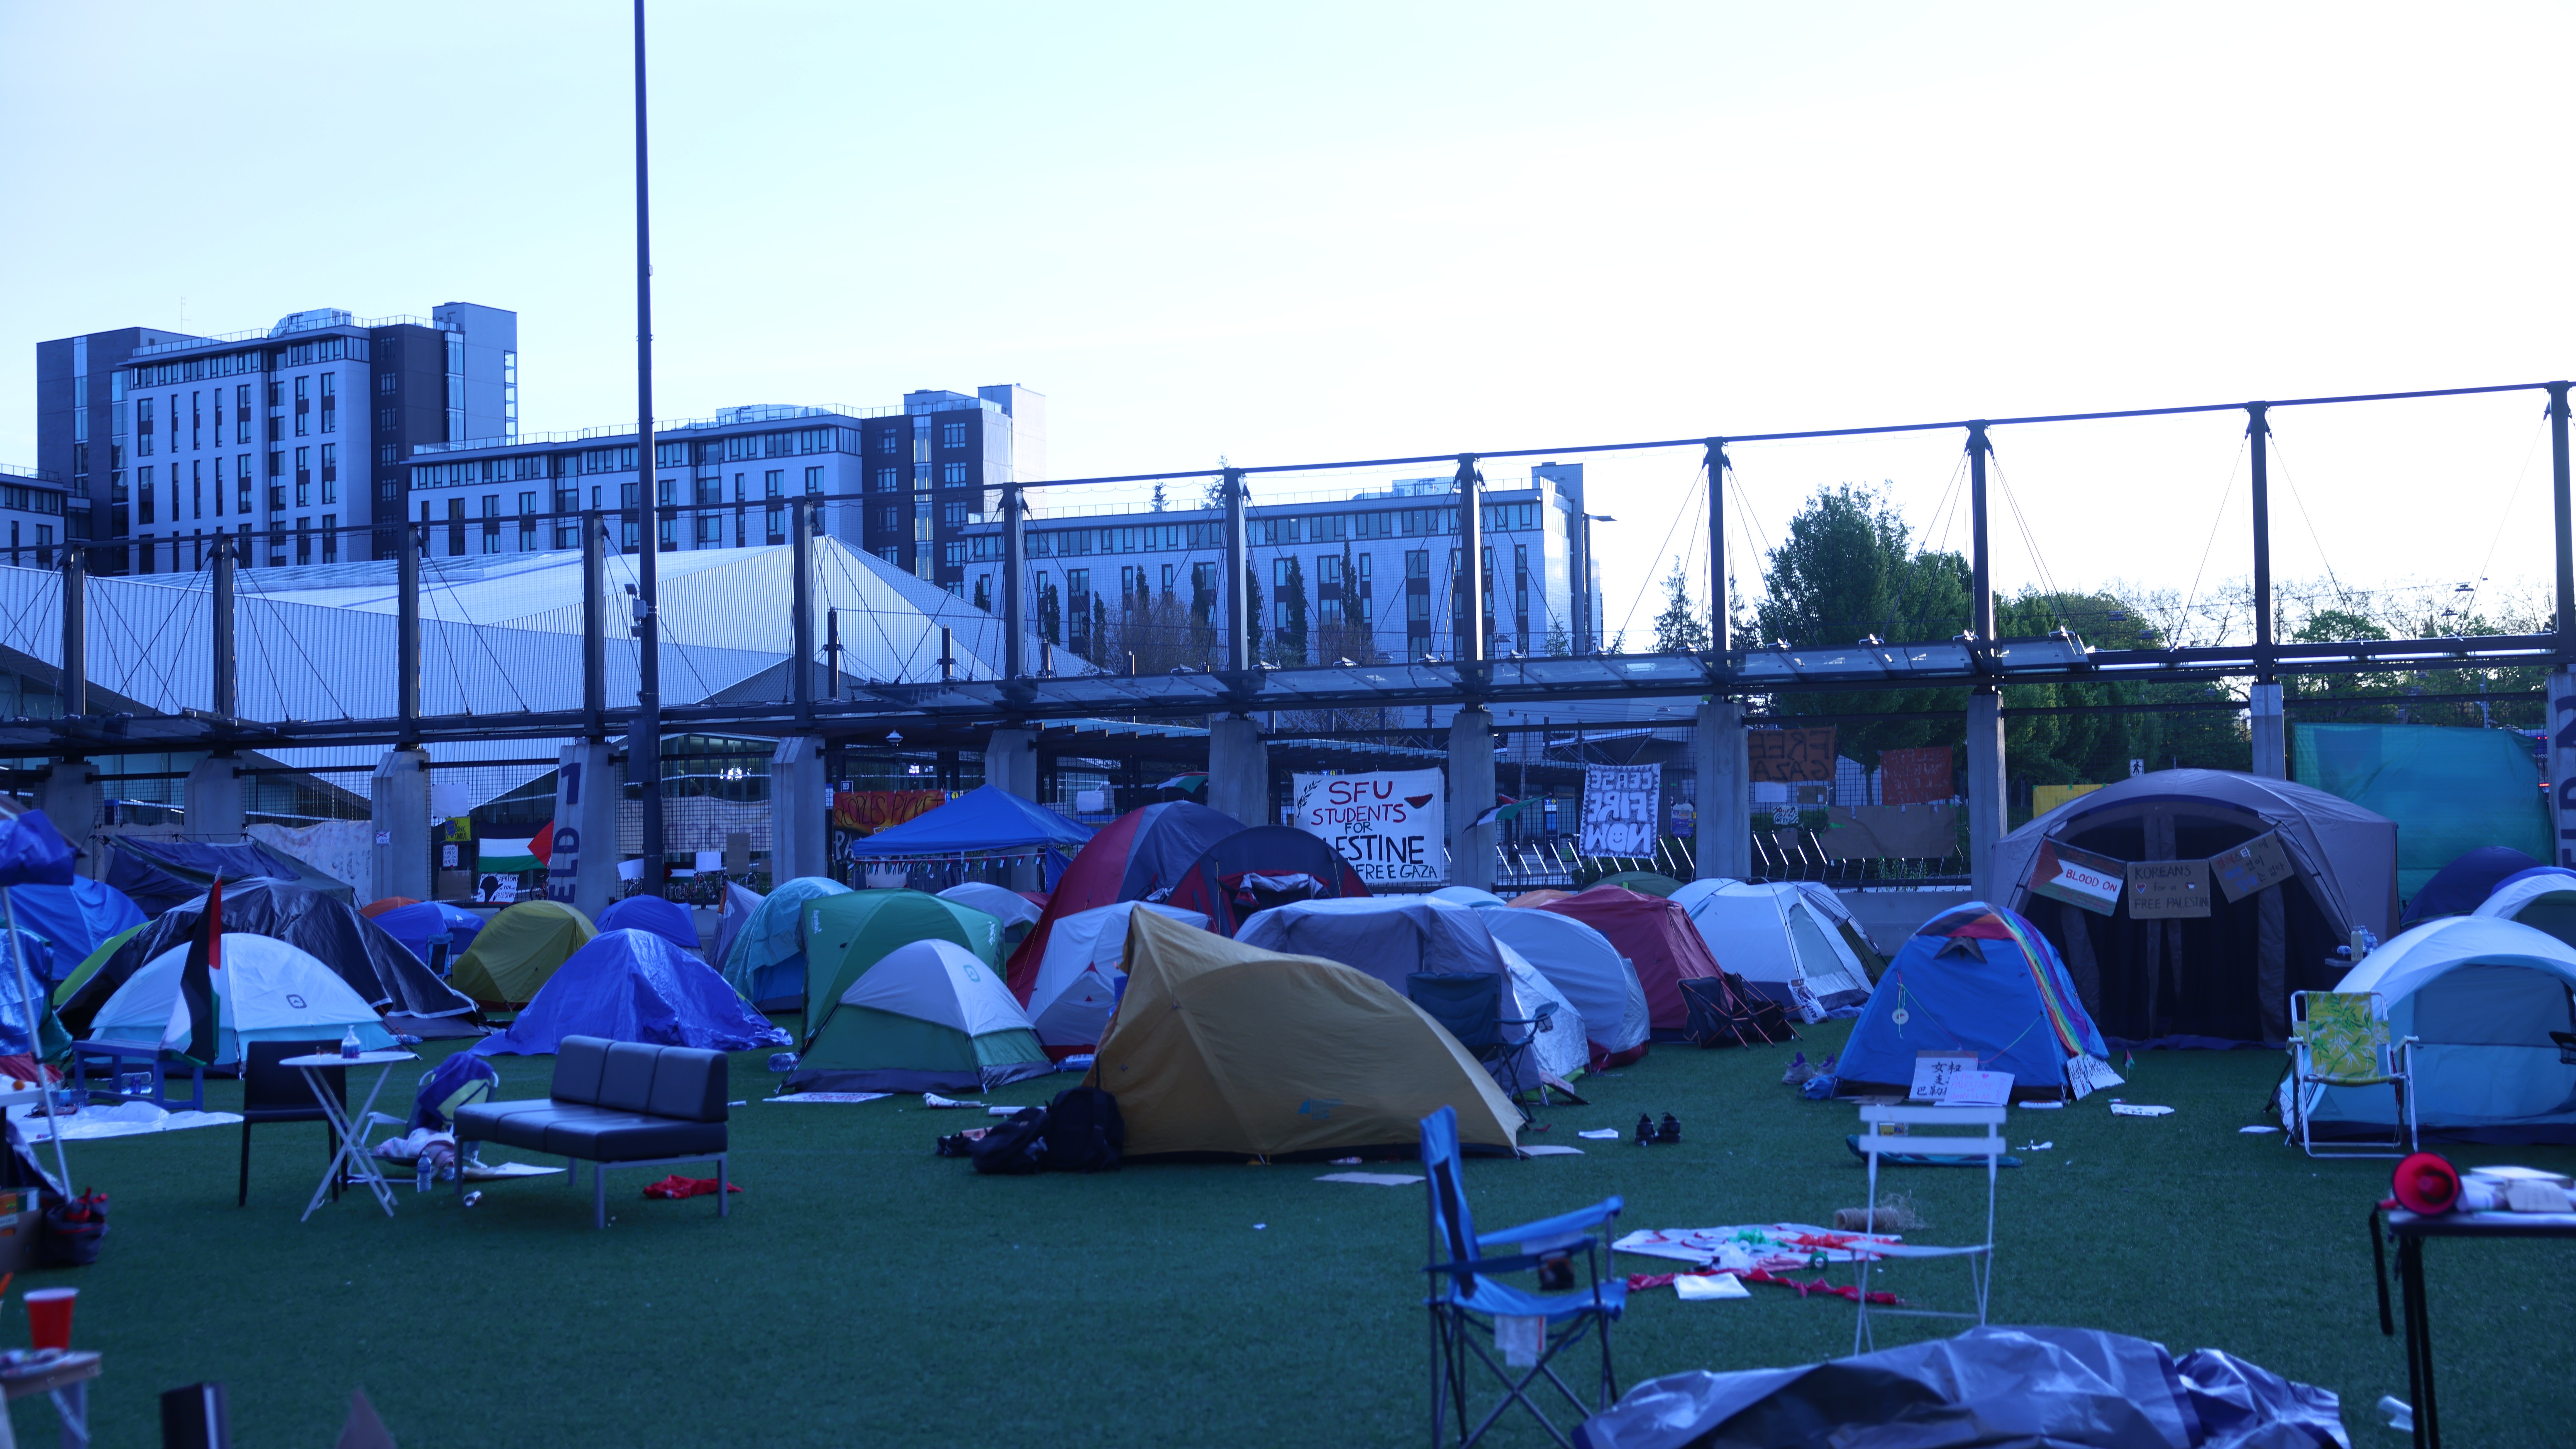 Tents at the encampment.